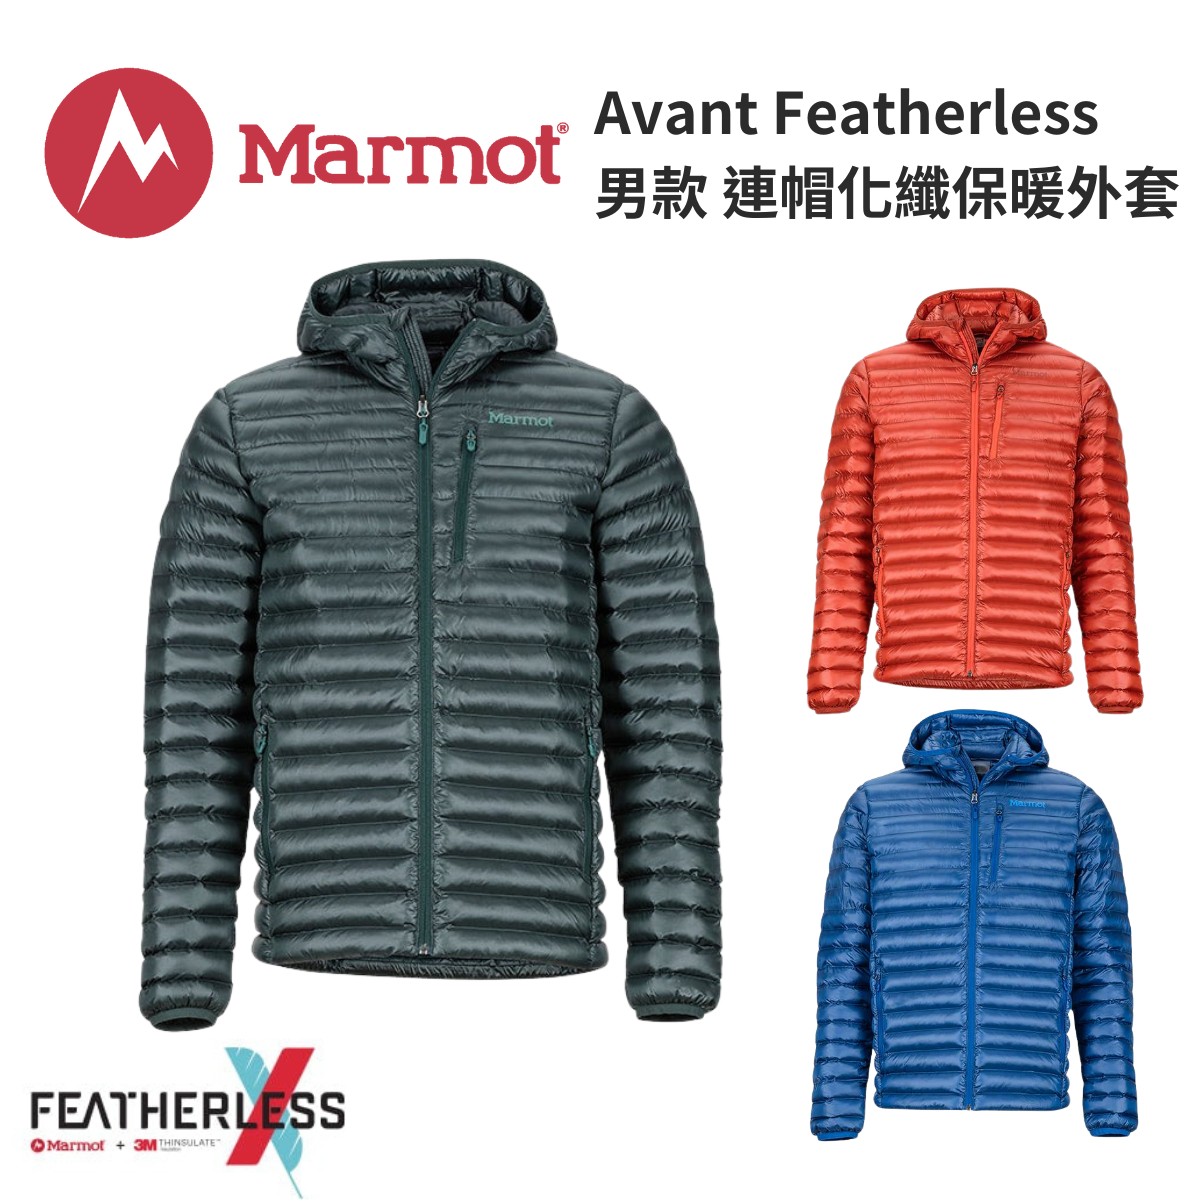 【Marmot】Avant Featherless 男款 連帽化纖保暖外套